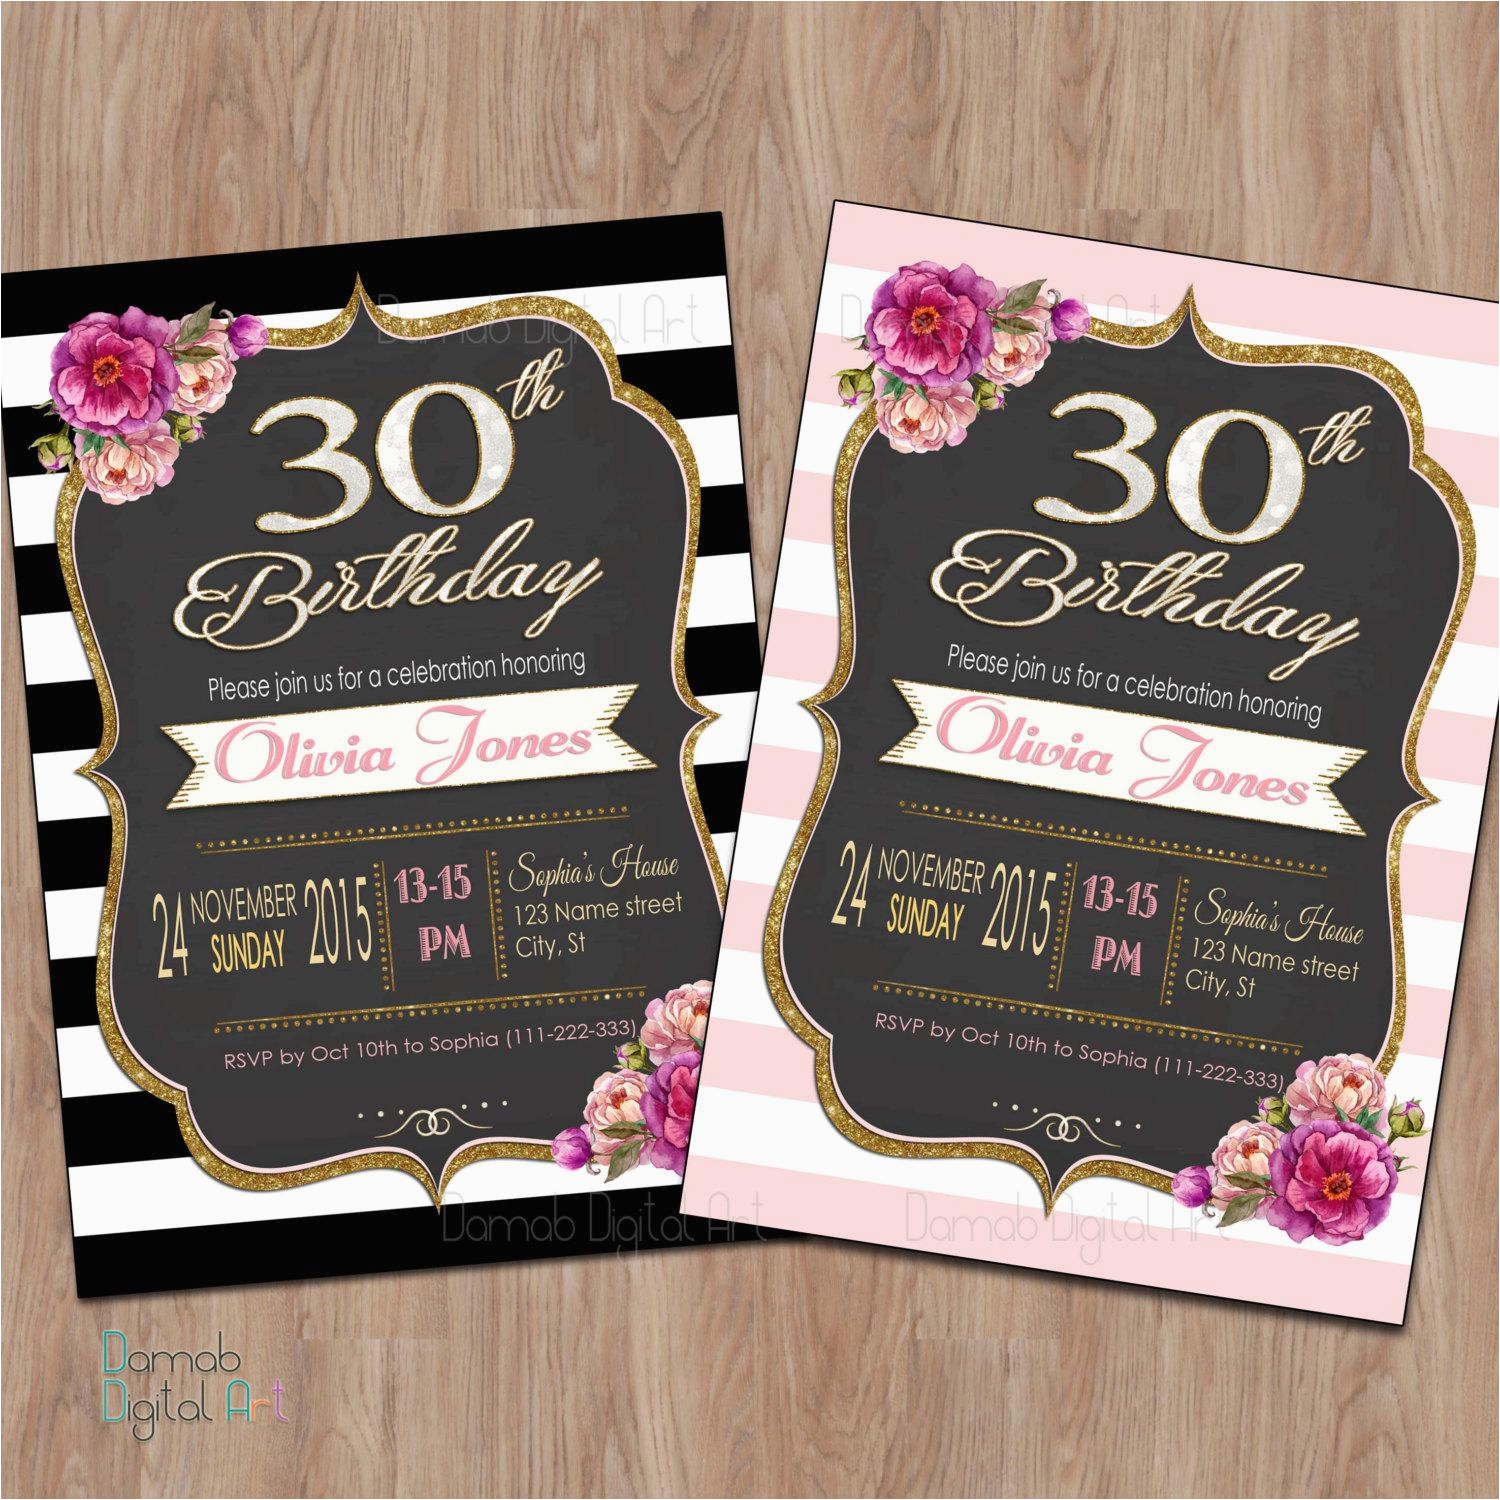 30th-birthday-quotes-for-invitations-quotesgram